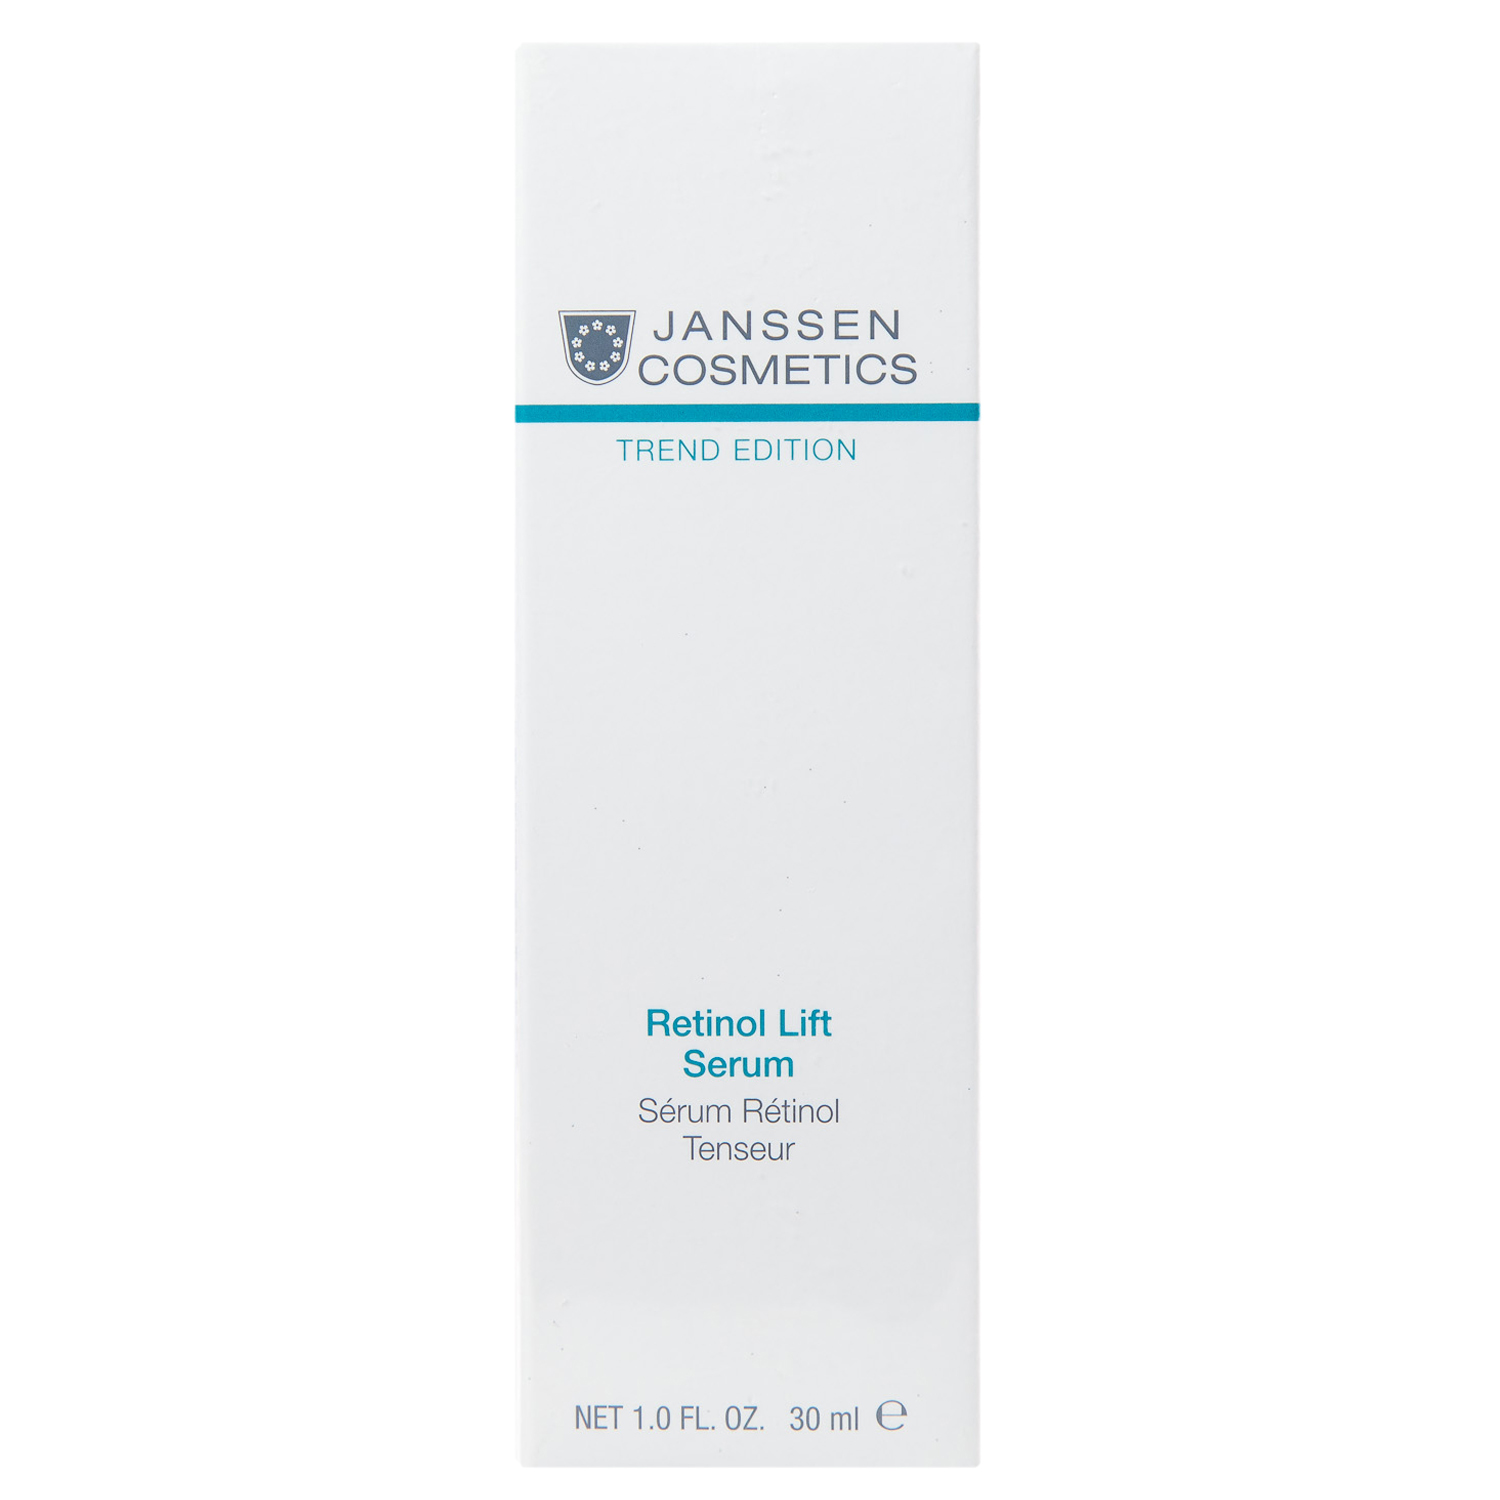 Janssen Cosmetics Лифтинг сыворотка с Ретинолом, 30 мл (Janssen Cosmetics, Trend Edition) janssen cosmetics эпигенетическая сыворотка молодости 15 мл janssen cosmetics trend edition